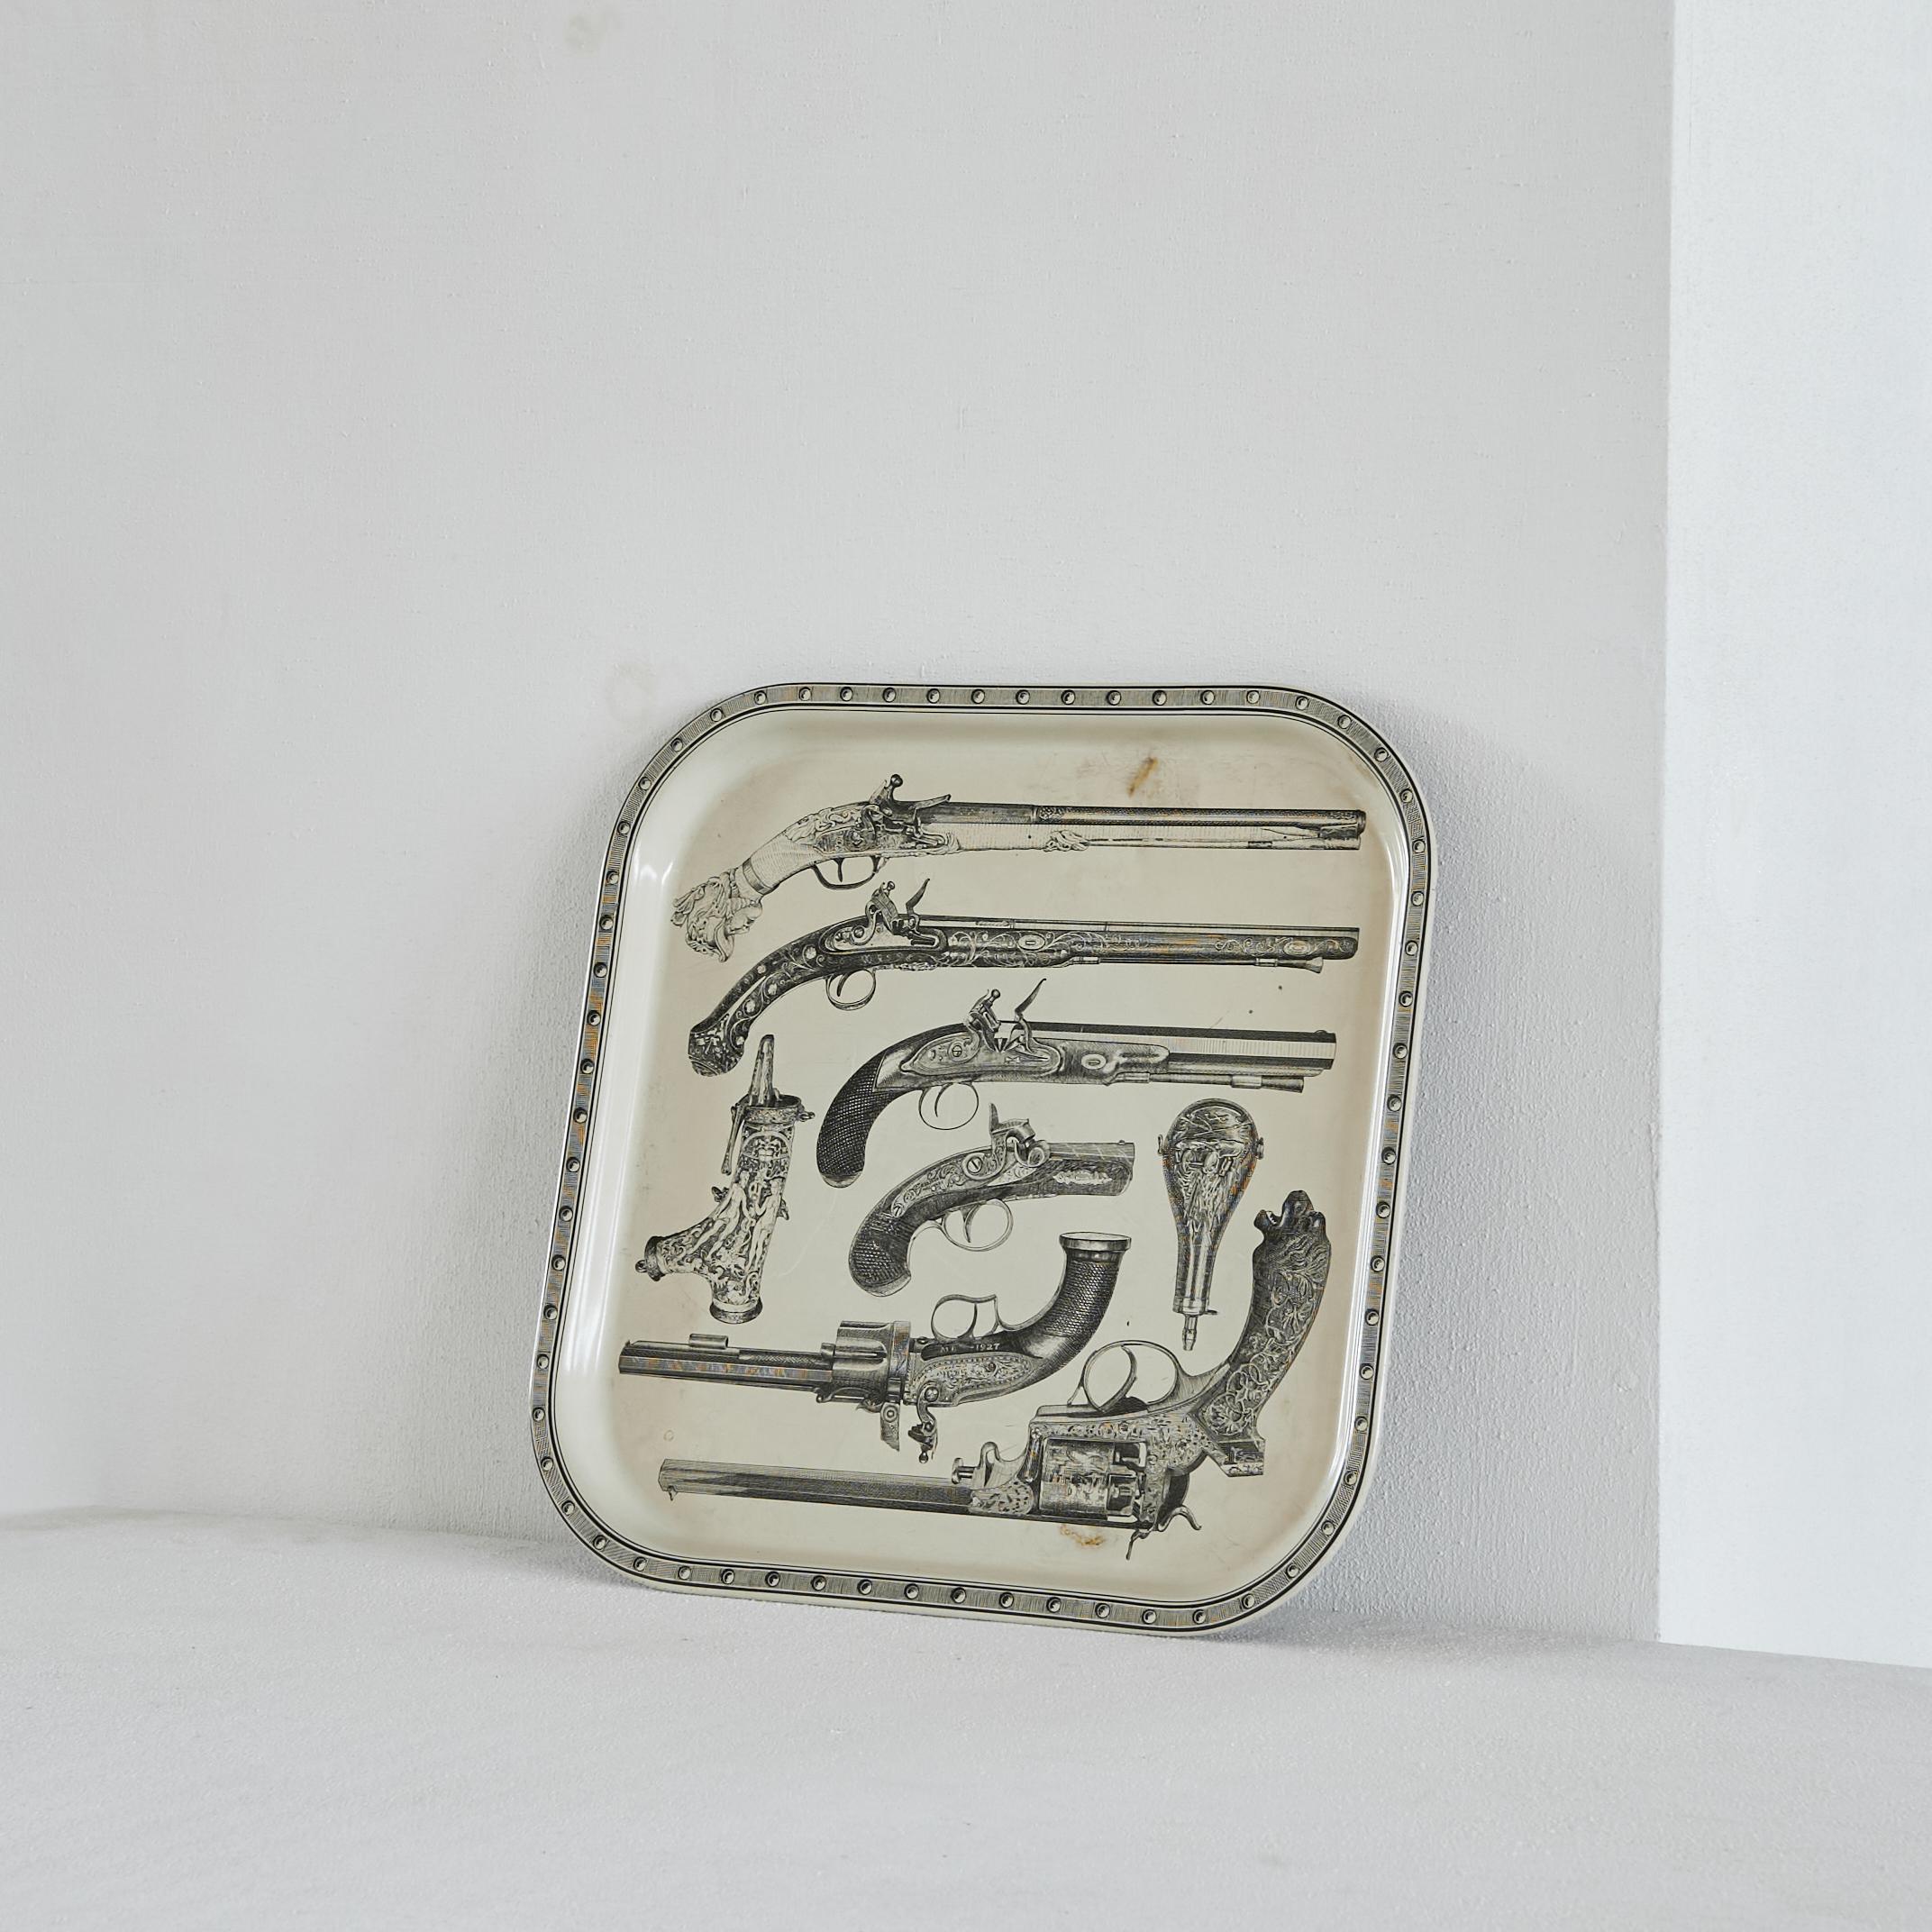 Piero Fornasetti 'Pistole' Tablett aus siebgedrucktem Metall, Italien, 1960er Jahre.

Dieses 